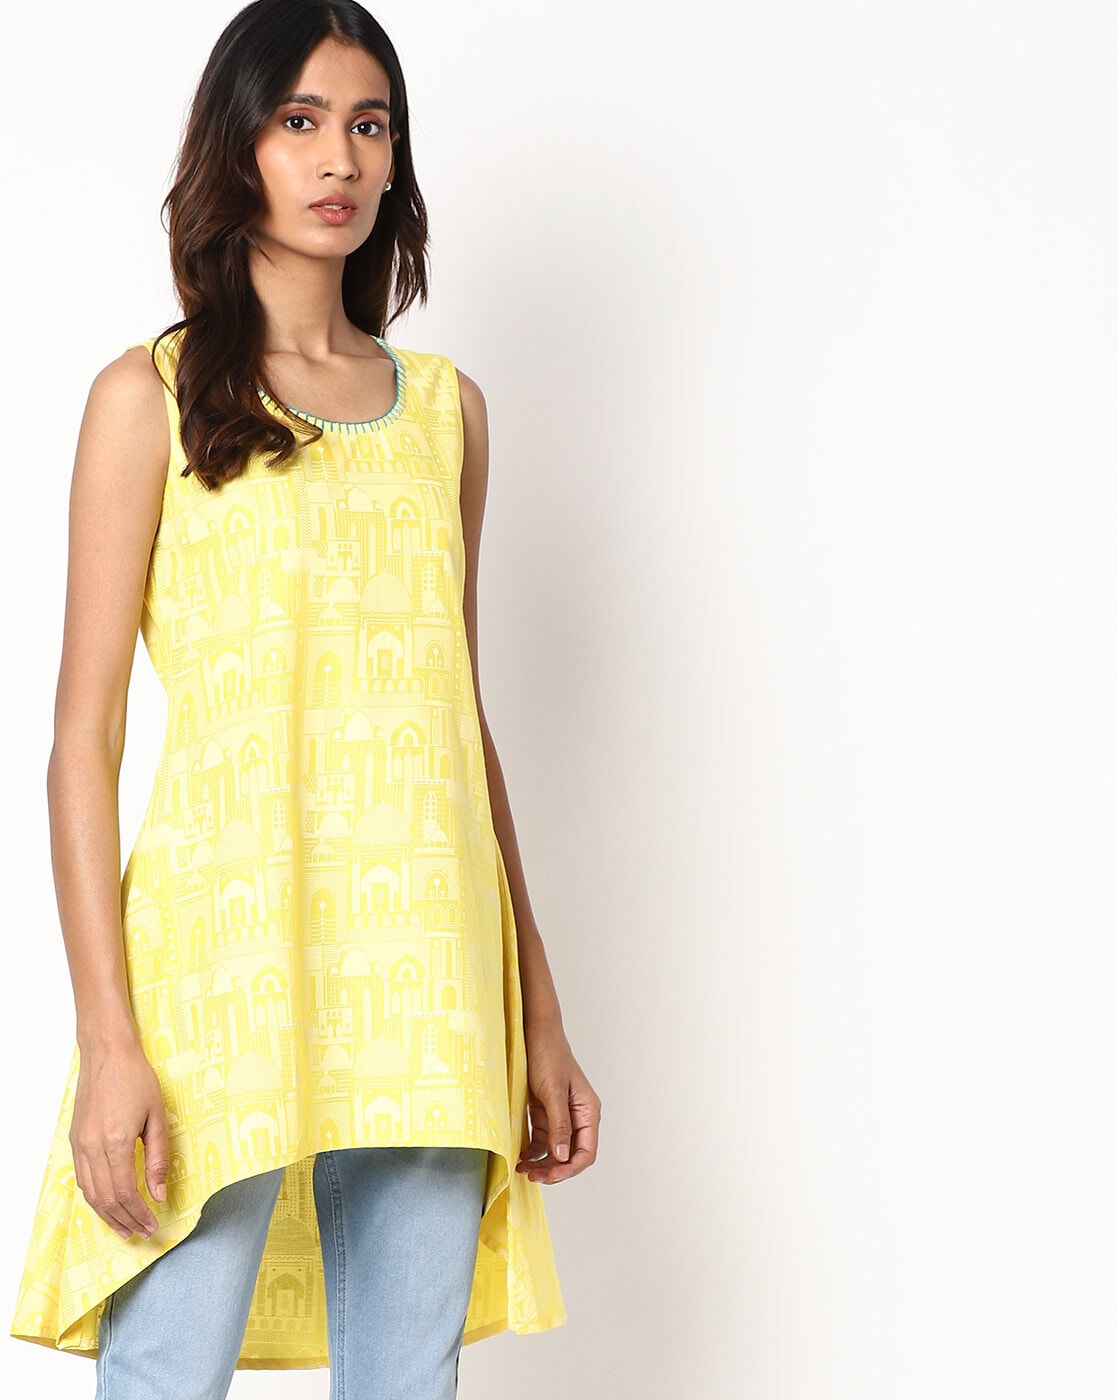 Buy Online Lime Yellow Cotton Kurti for Women  Girls at Best Prices in  Biba IndiaDISTRIBU15826AW20